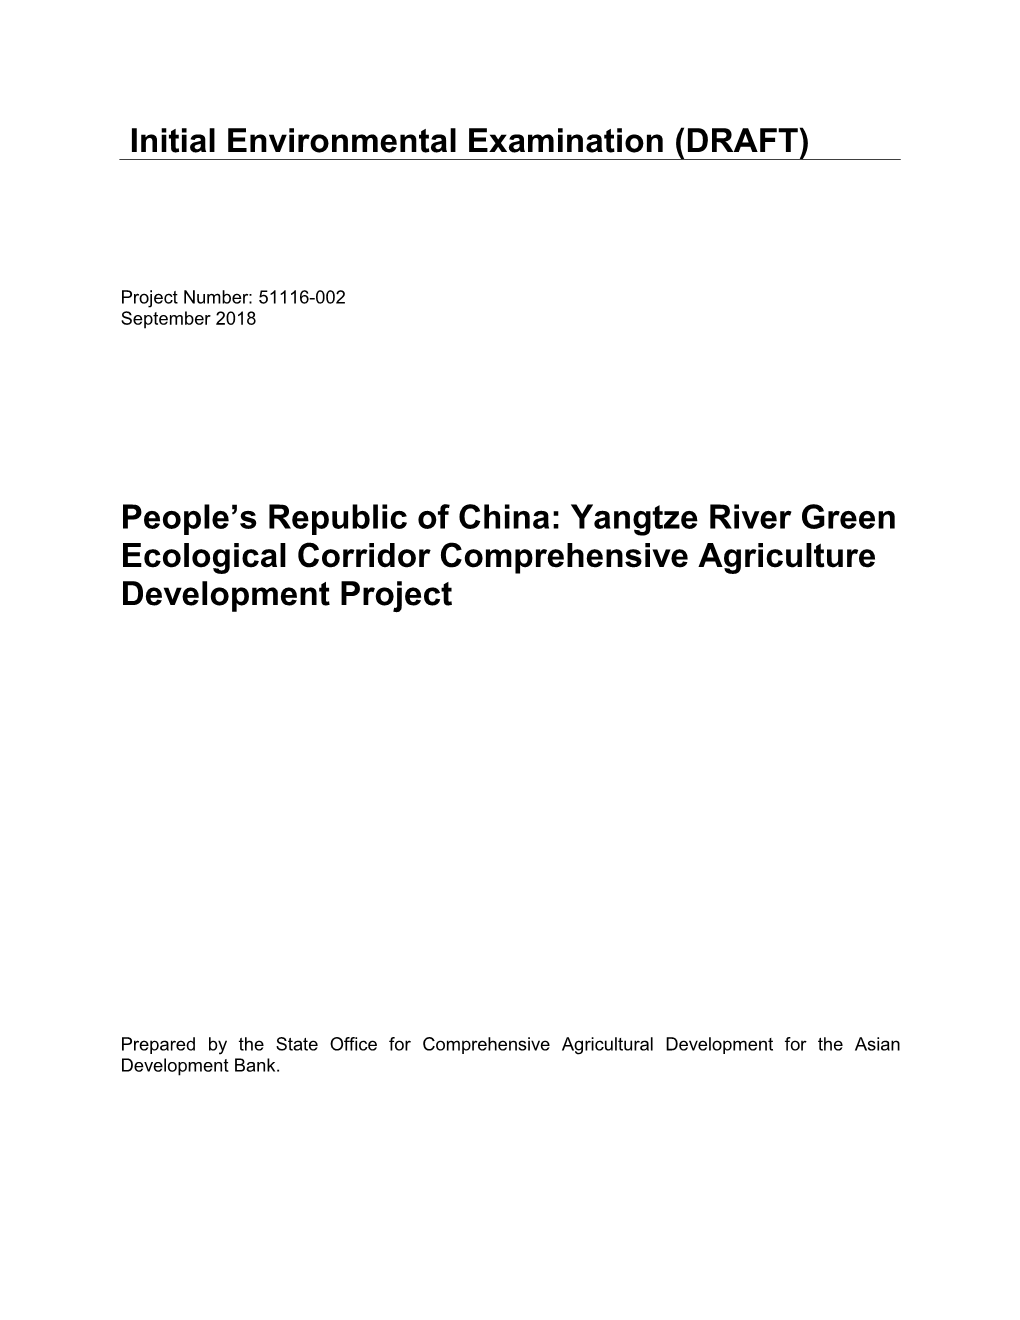 Yangtze River Green Ecological Corridor Comprehensive Agriculture Development Project